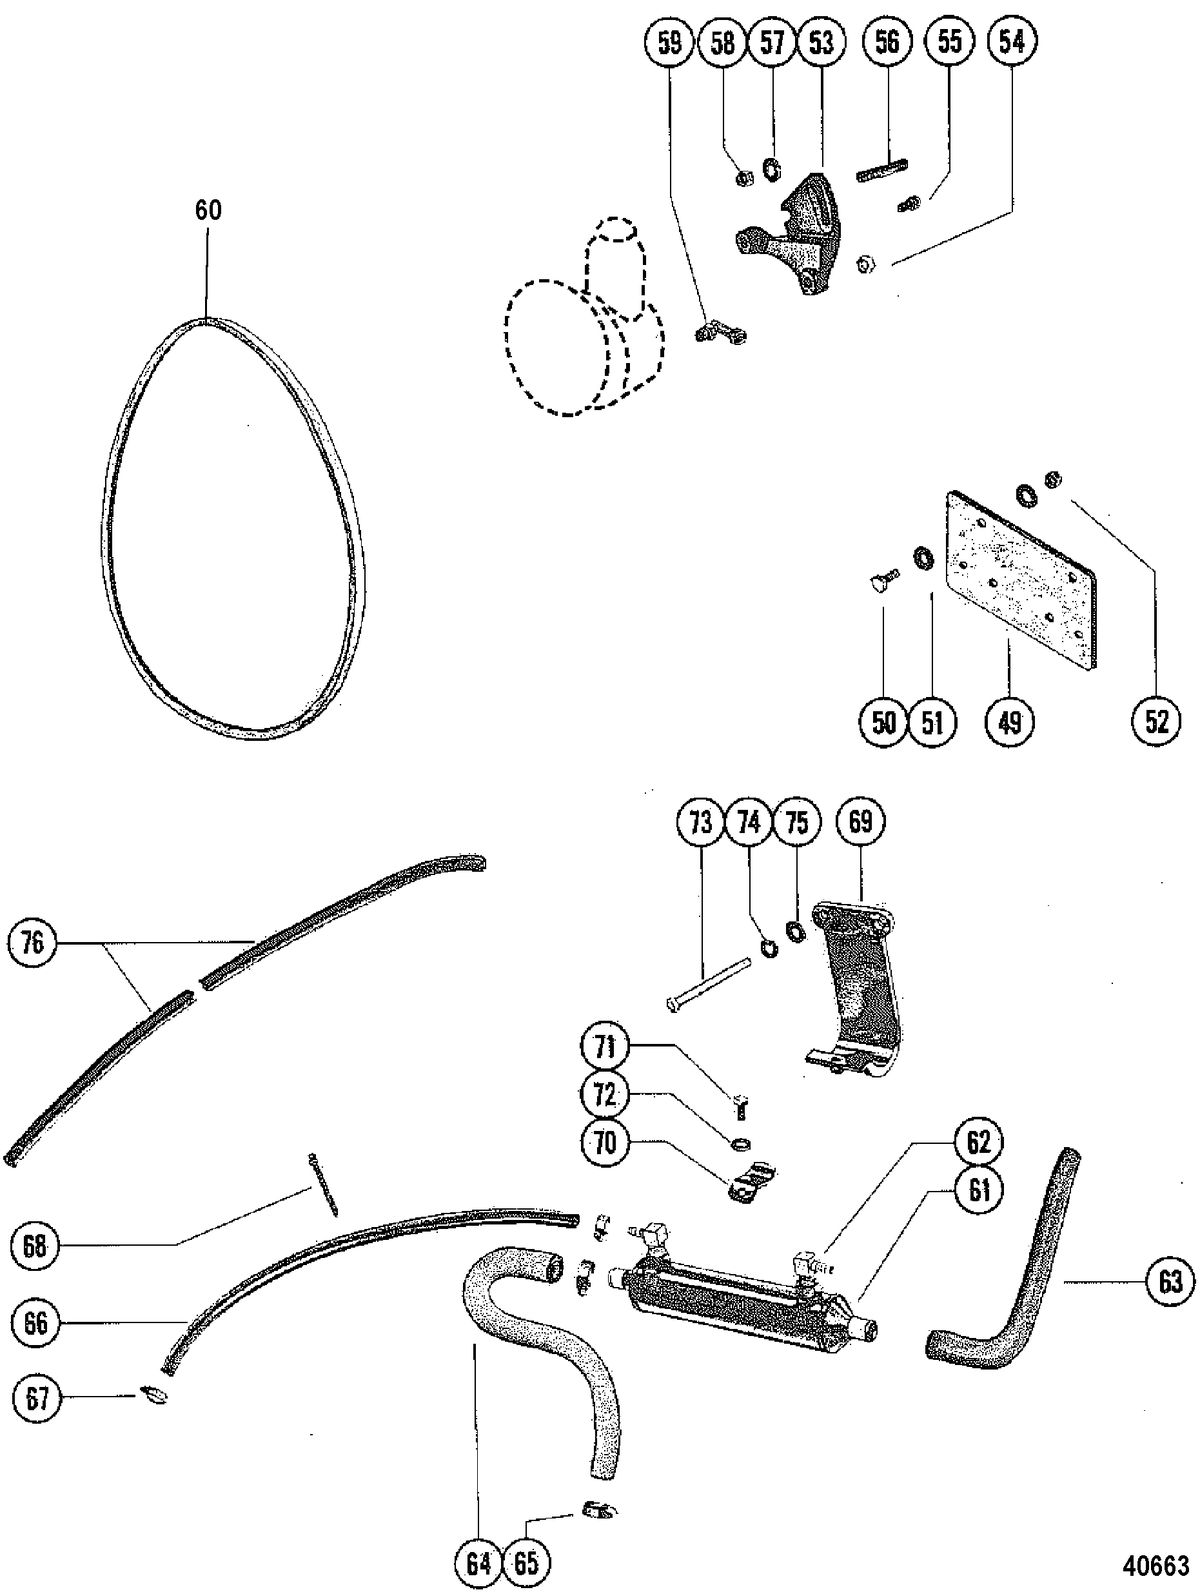 MERCRUISER 470 ENGINE Power Steering Kit(Page 2 of 2)